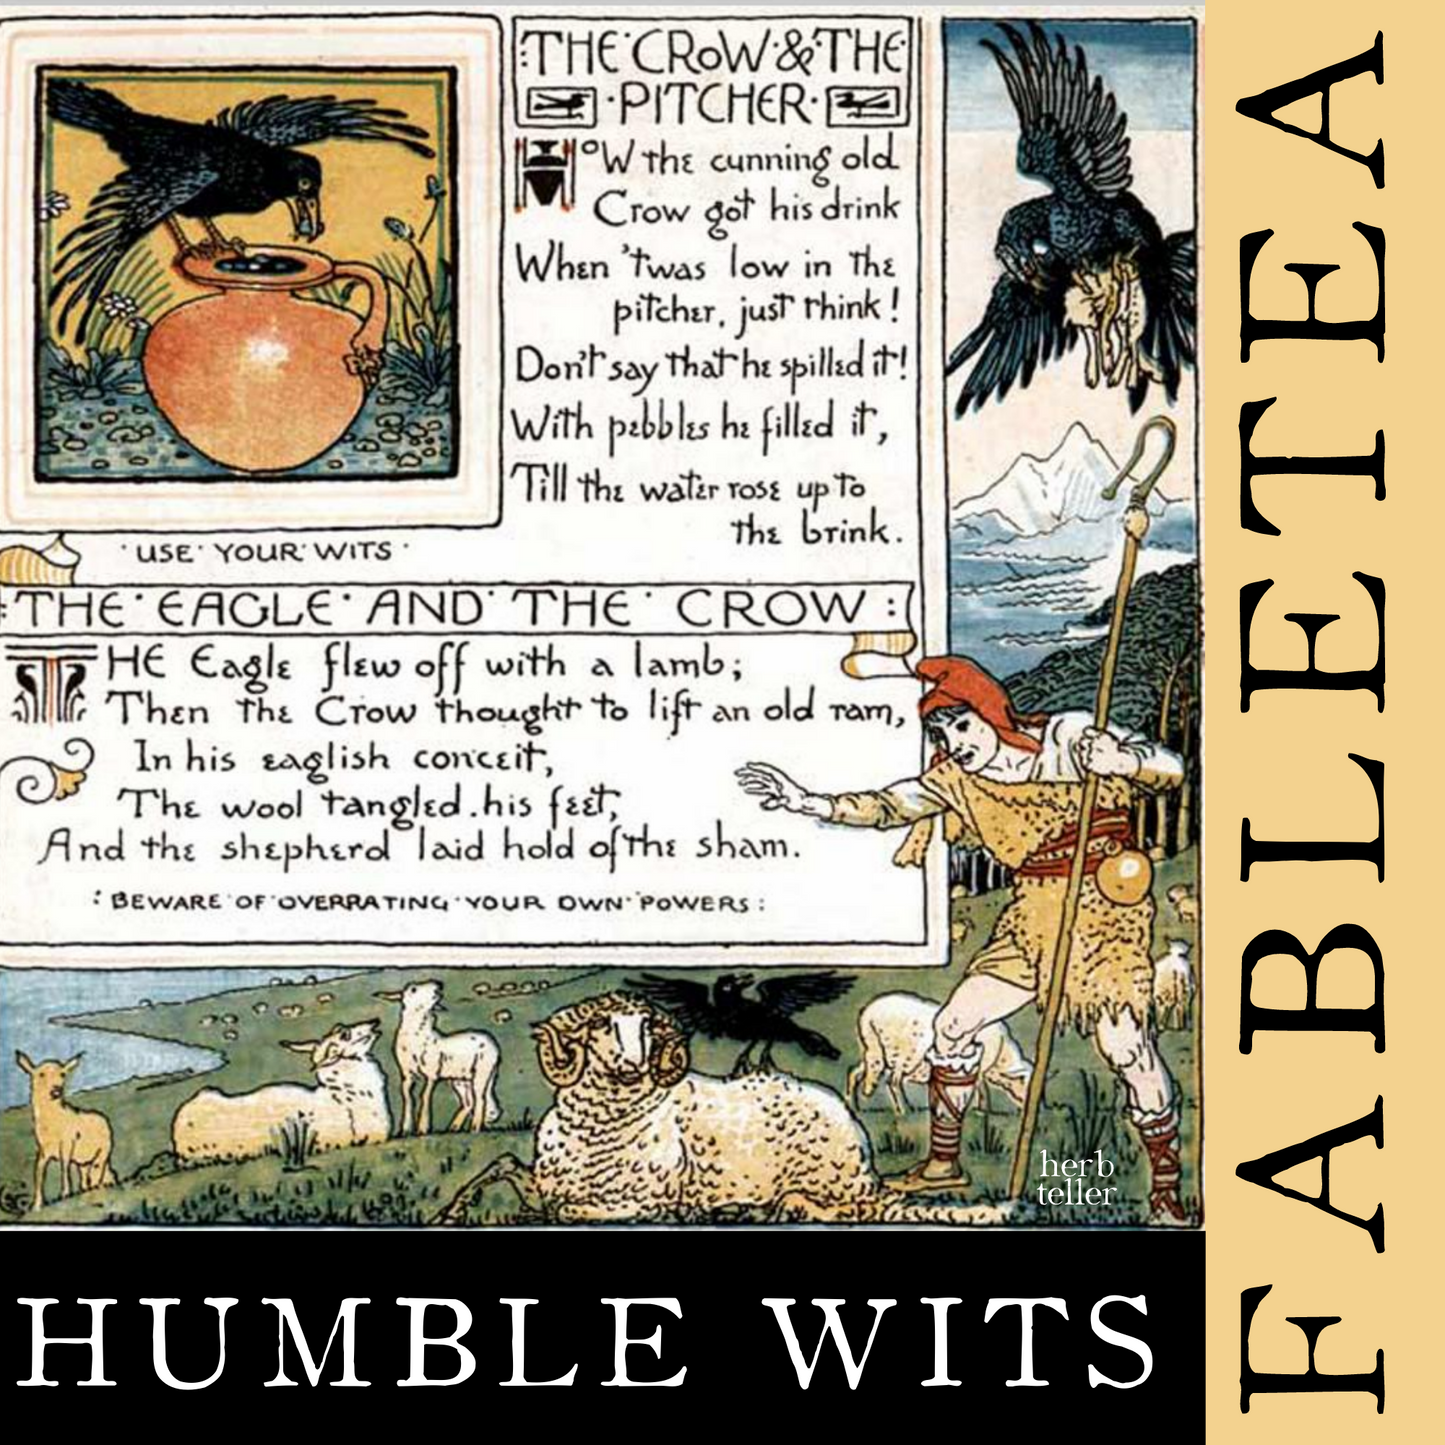 Fabletea: Humblewits Herbal Tea (Aesop's Fable) - Original City Apothecary